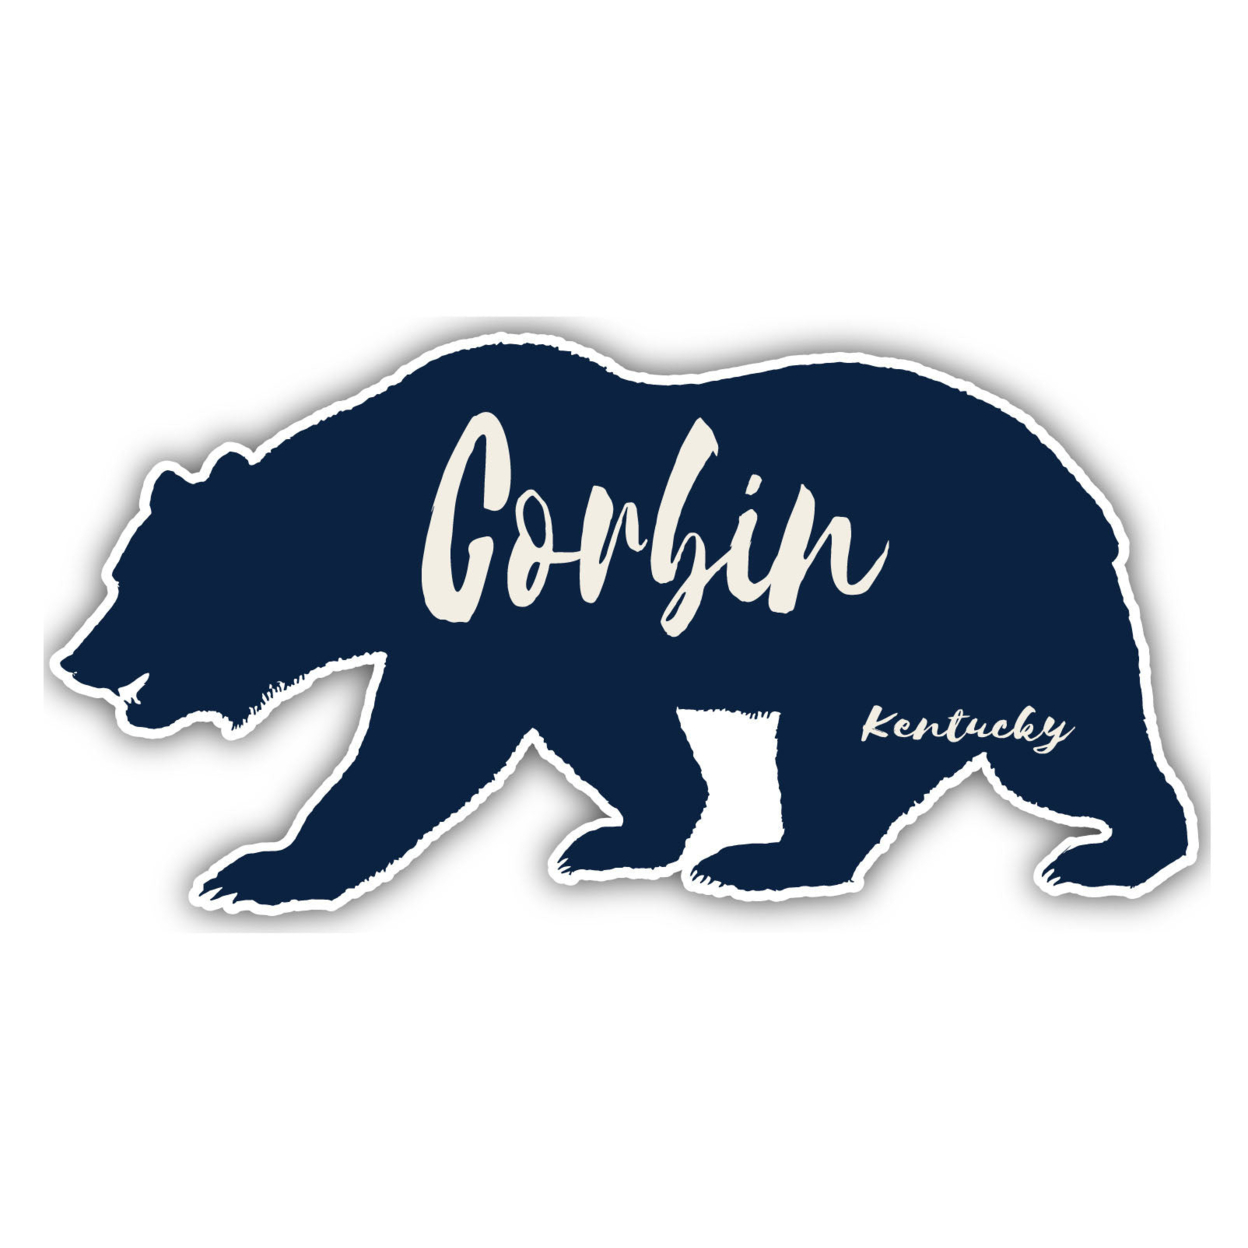 Corbin Kentucky Souvenir Decorative Stickers (Choose Theme And Size) - Single Unit, 4-Inch, Tent